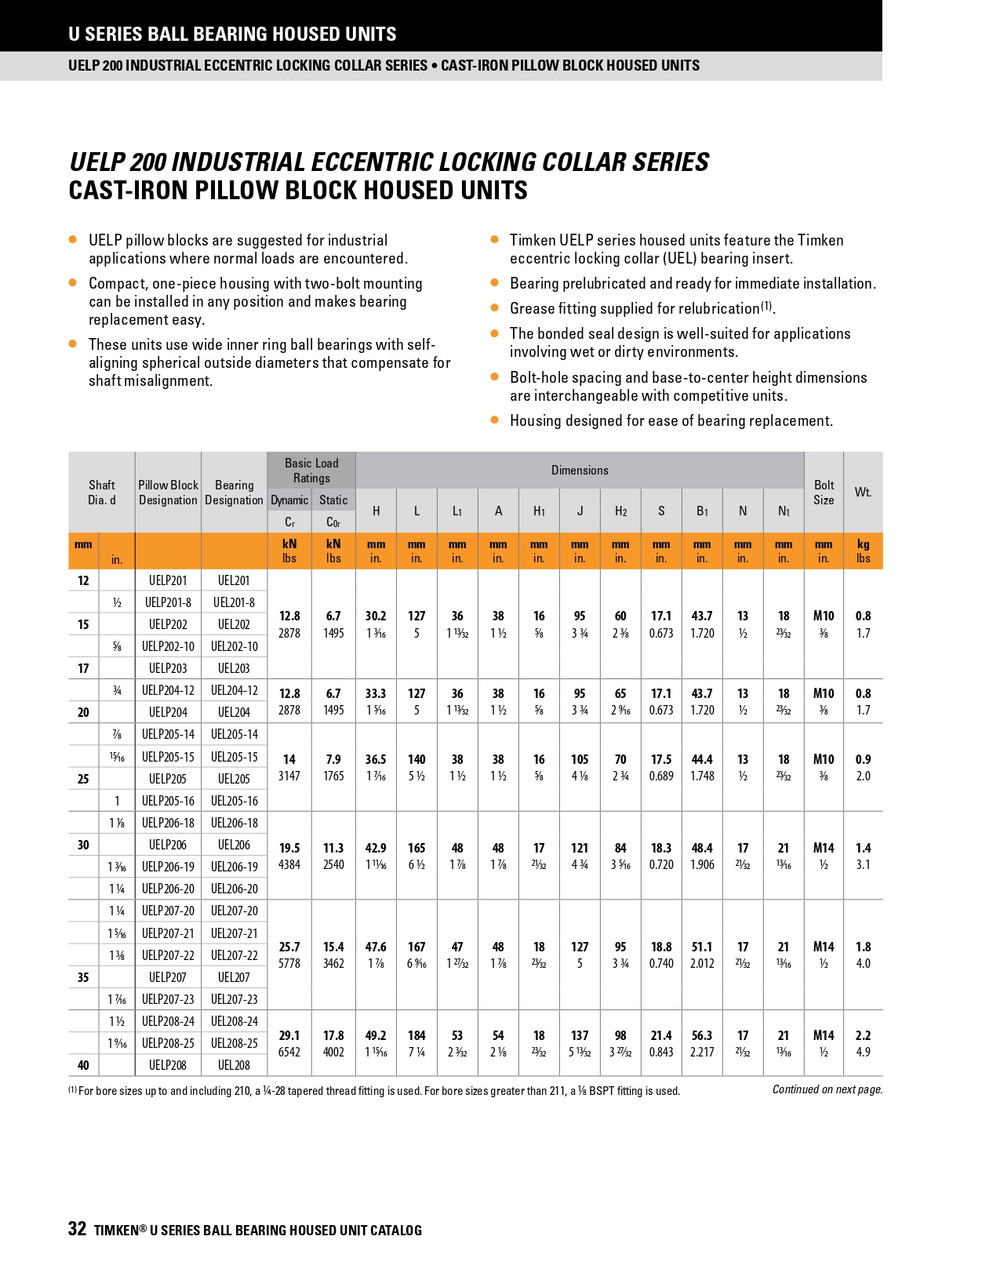 1" Standard Duty Eccentric Locking Collar Pillow Block Assembly   UELP205-16